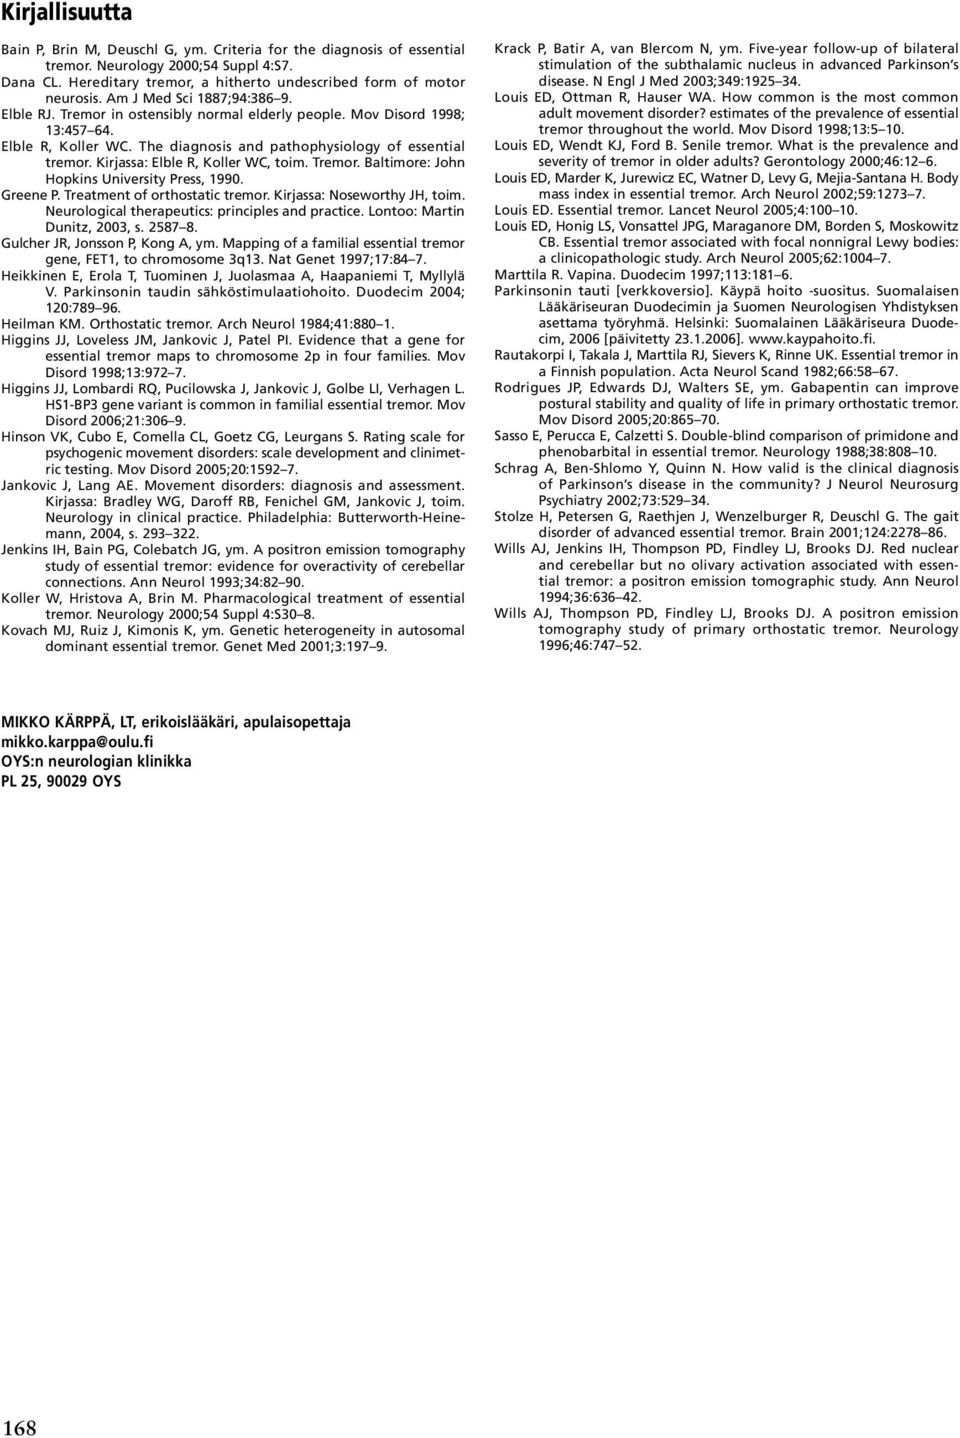 Kirjassa: Elble R, Koller WC, toim. Tremor. Baltimore: John Hopkins University Press, 1990. Greene P. Treatment of orthostatic tremor. Kirjassa: Noseworthy JH, toim.